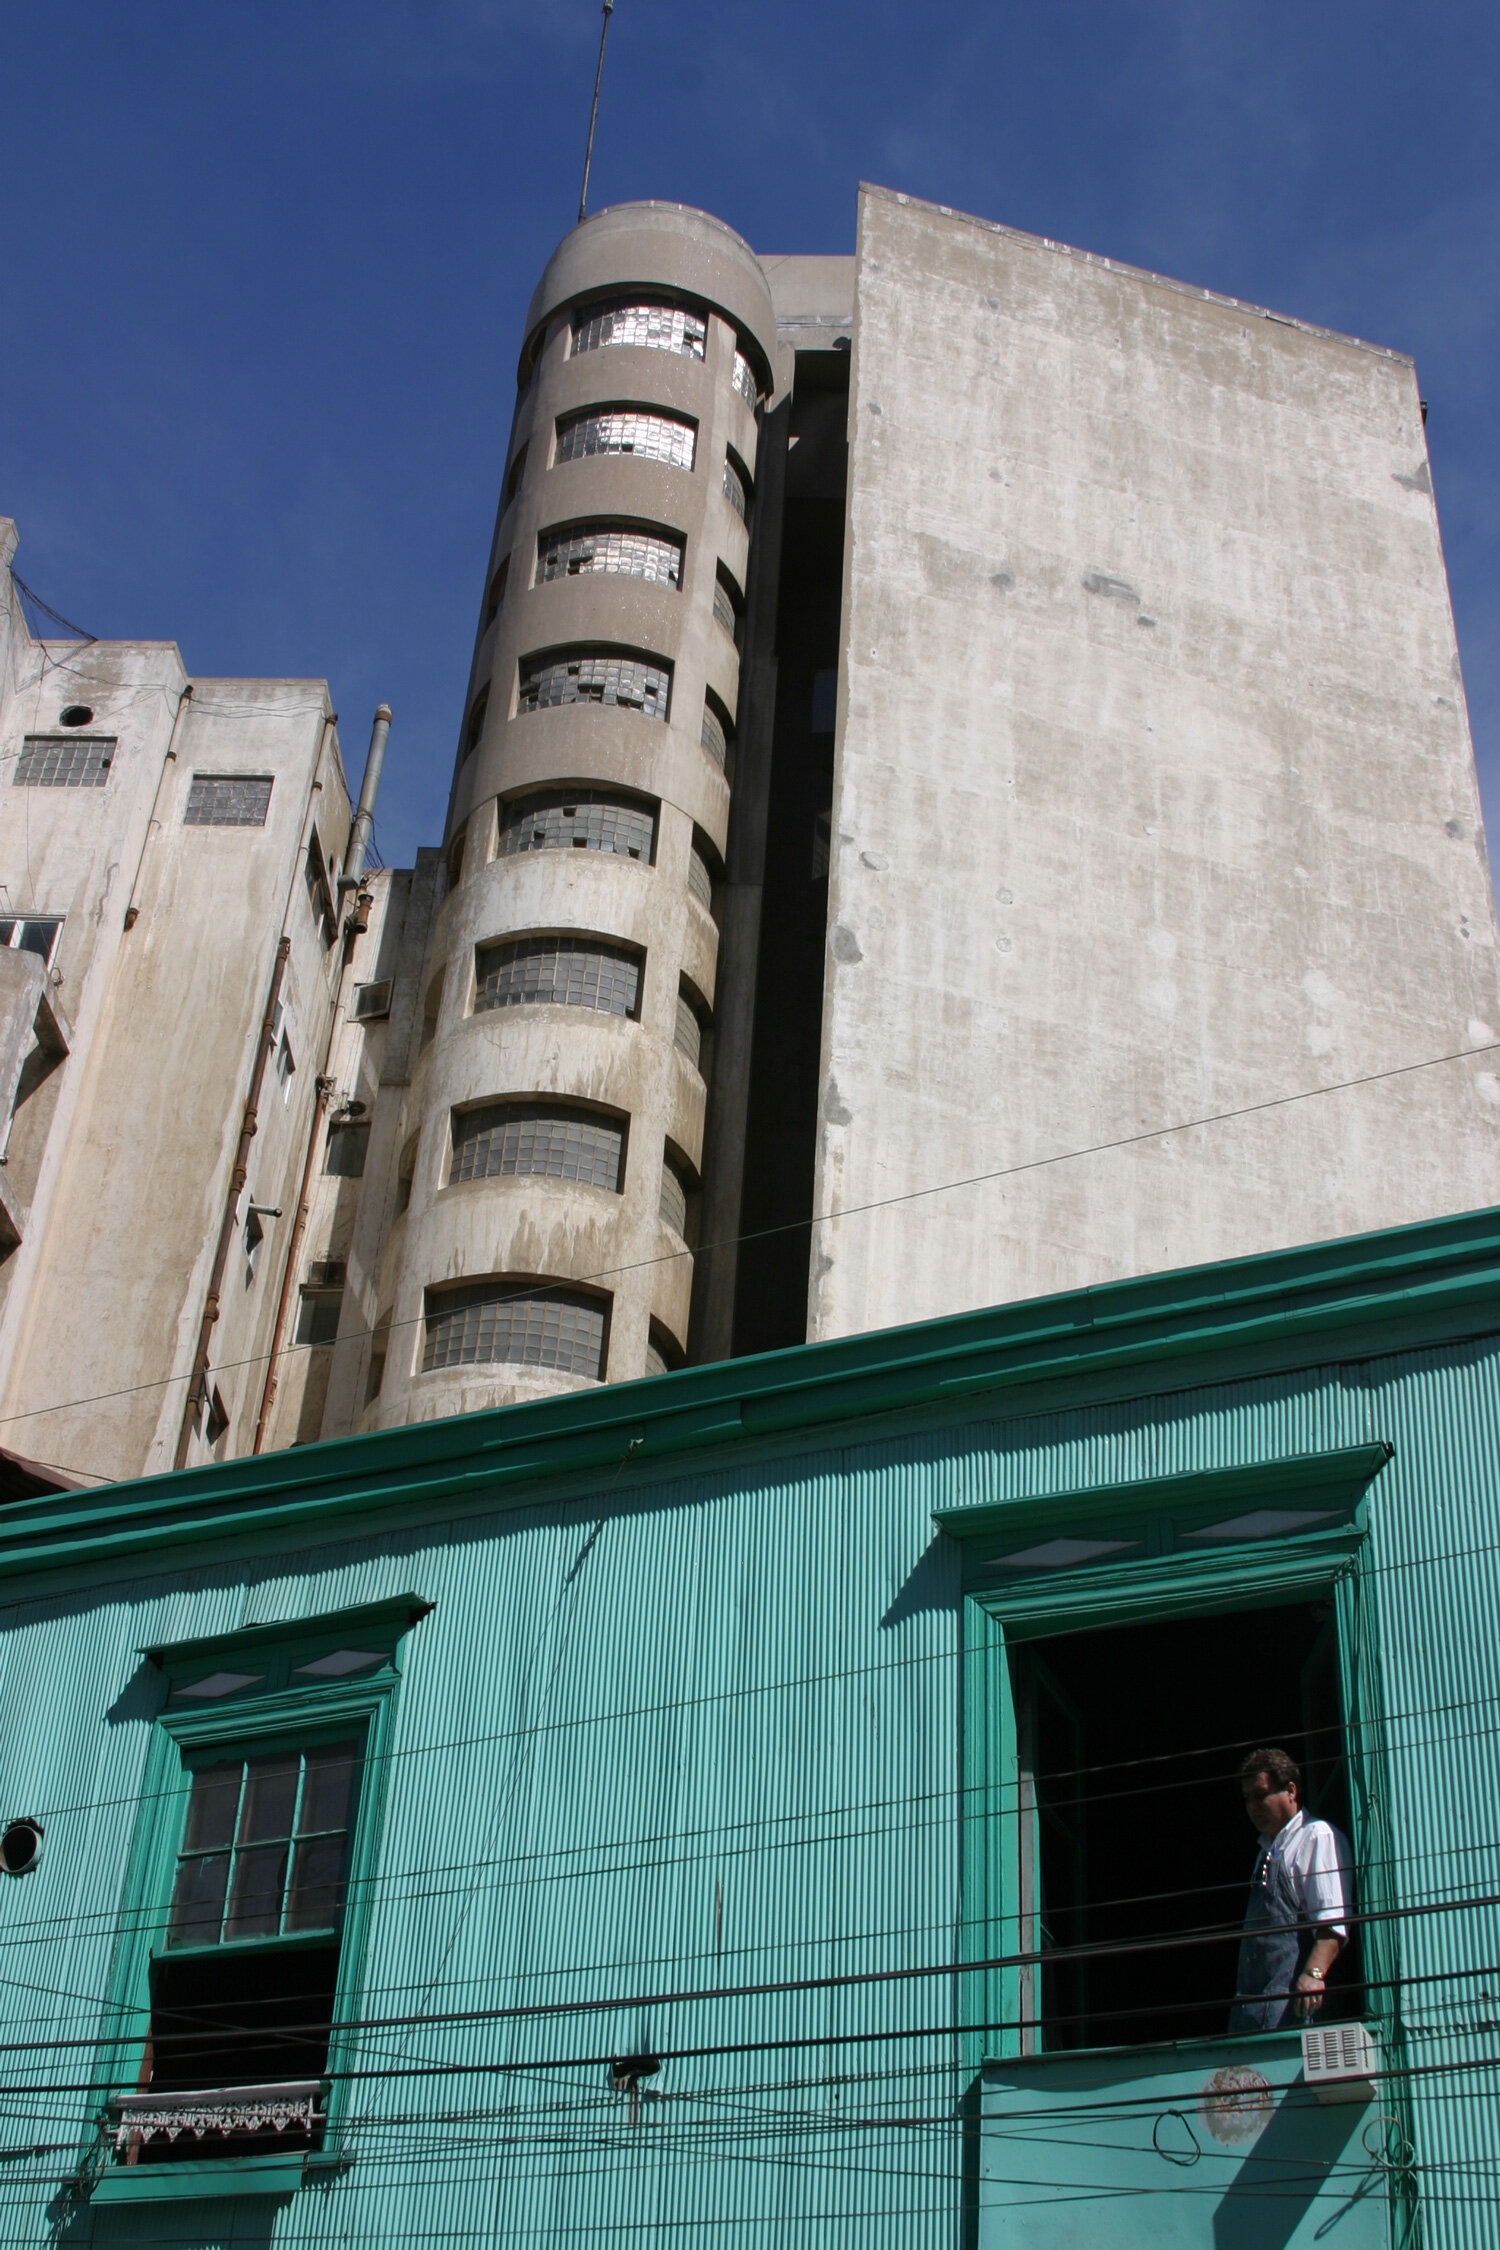 chile_valparaiso_street_window_man.jpg